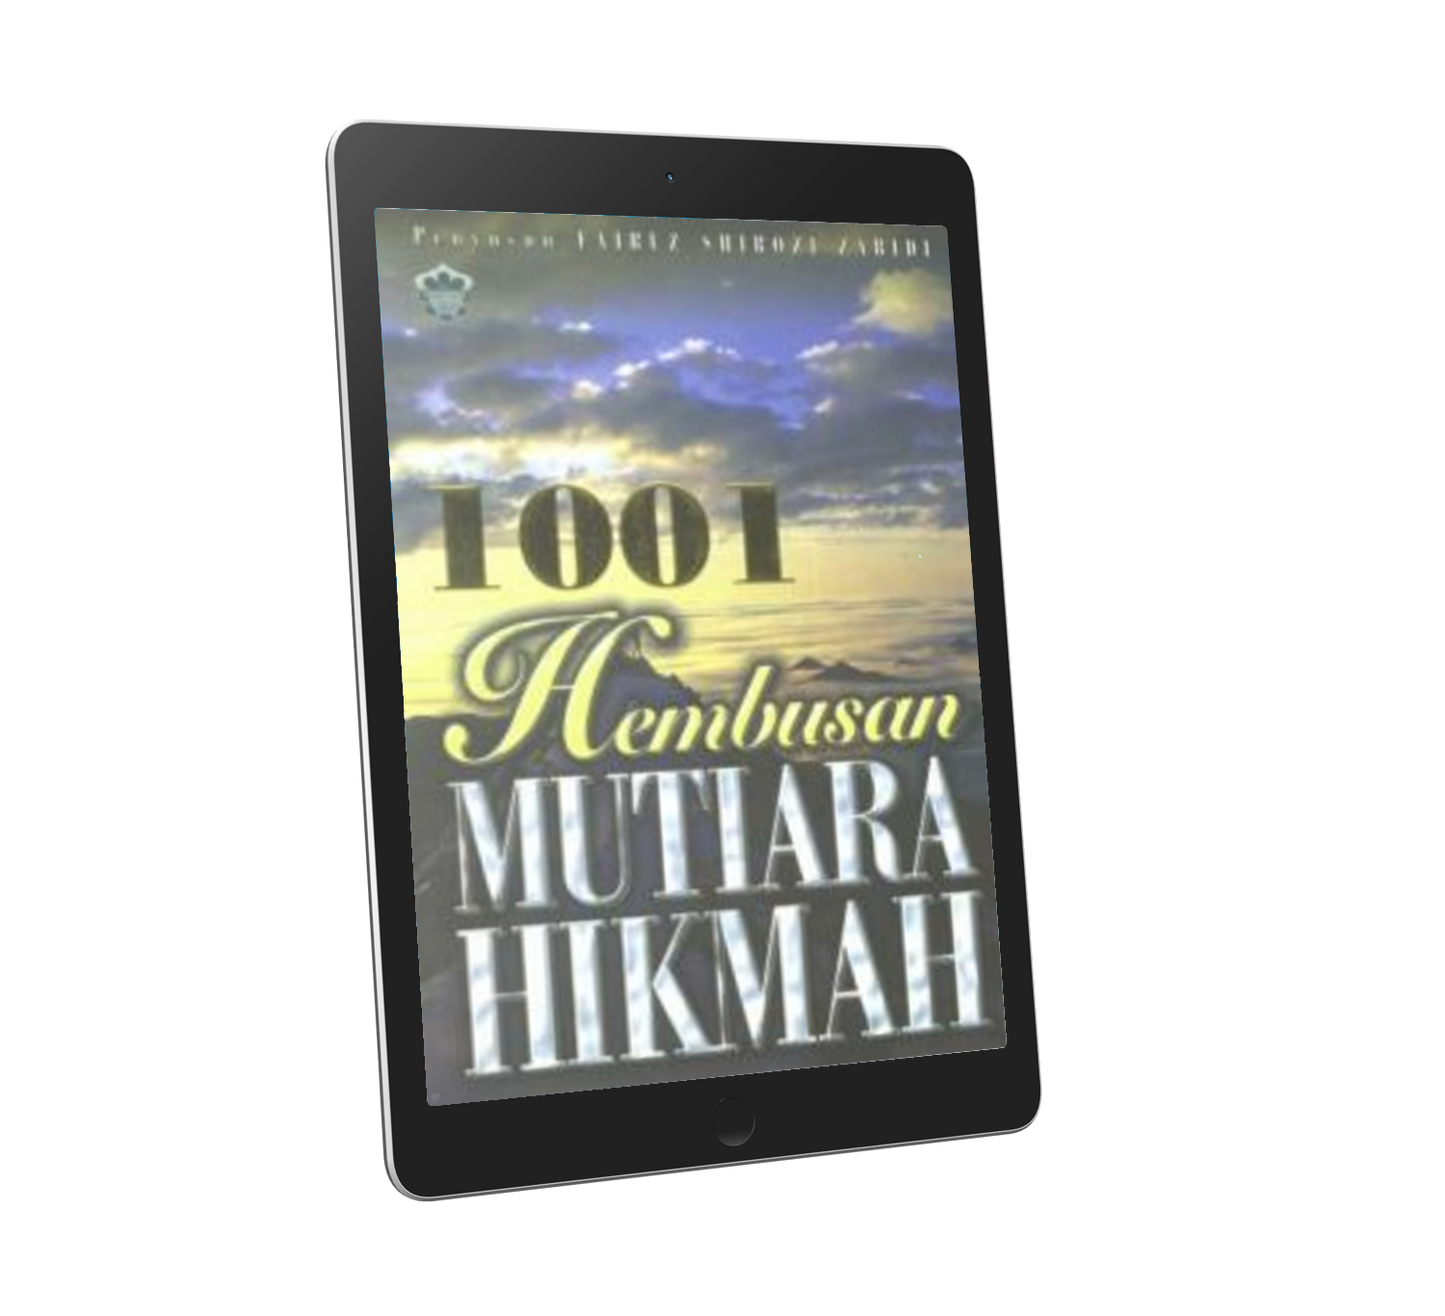 1001 Hembusan Mutiara Hikmah